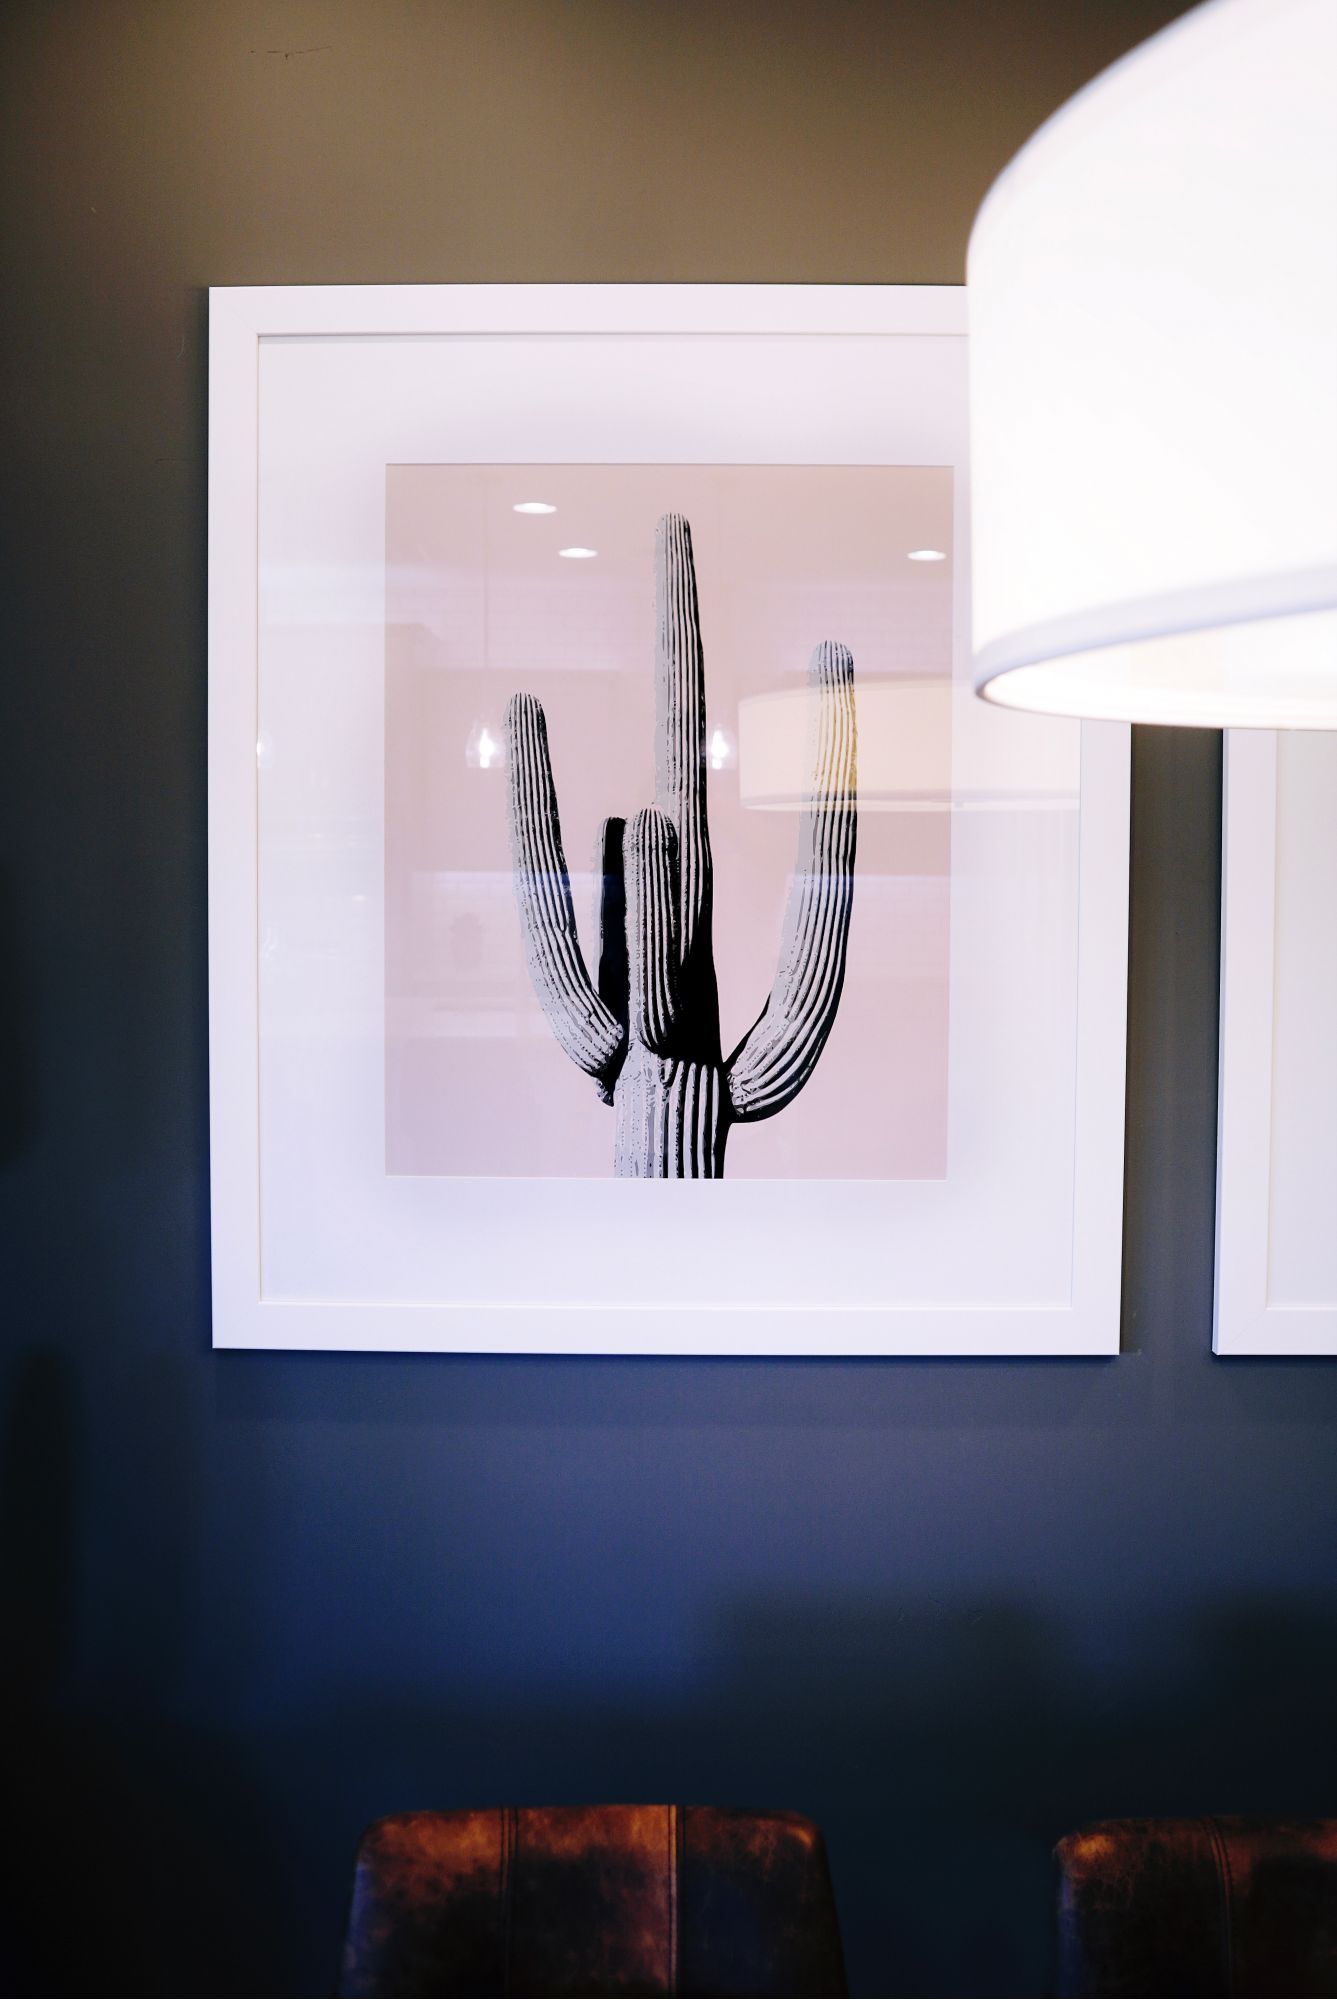 Cactus per arredare casa: fotografie e stampe a parete